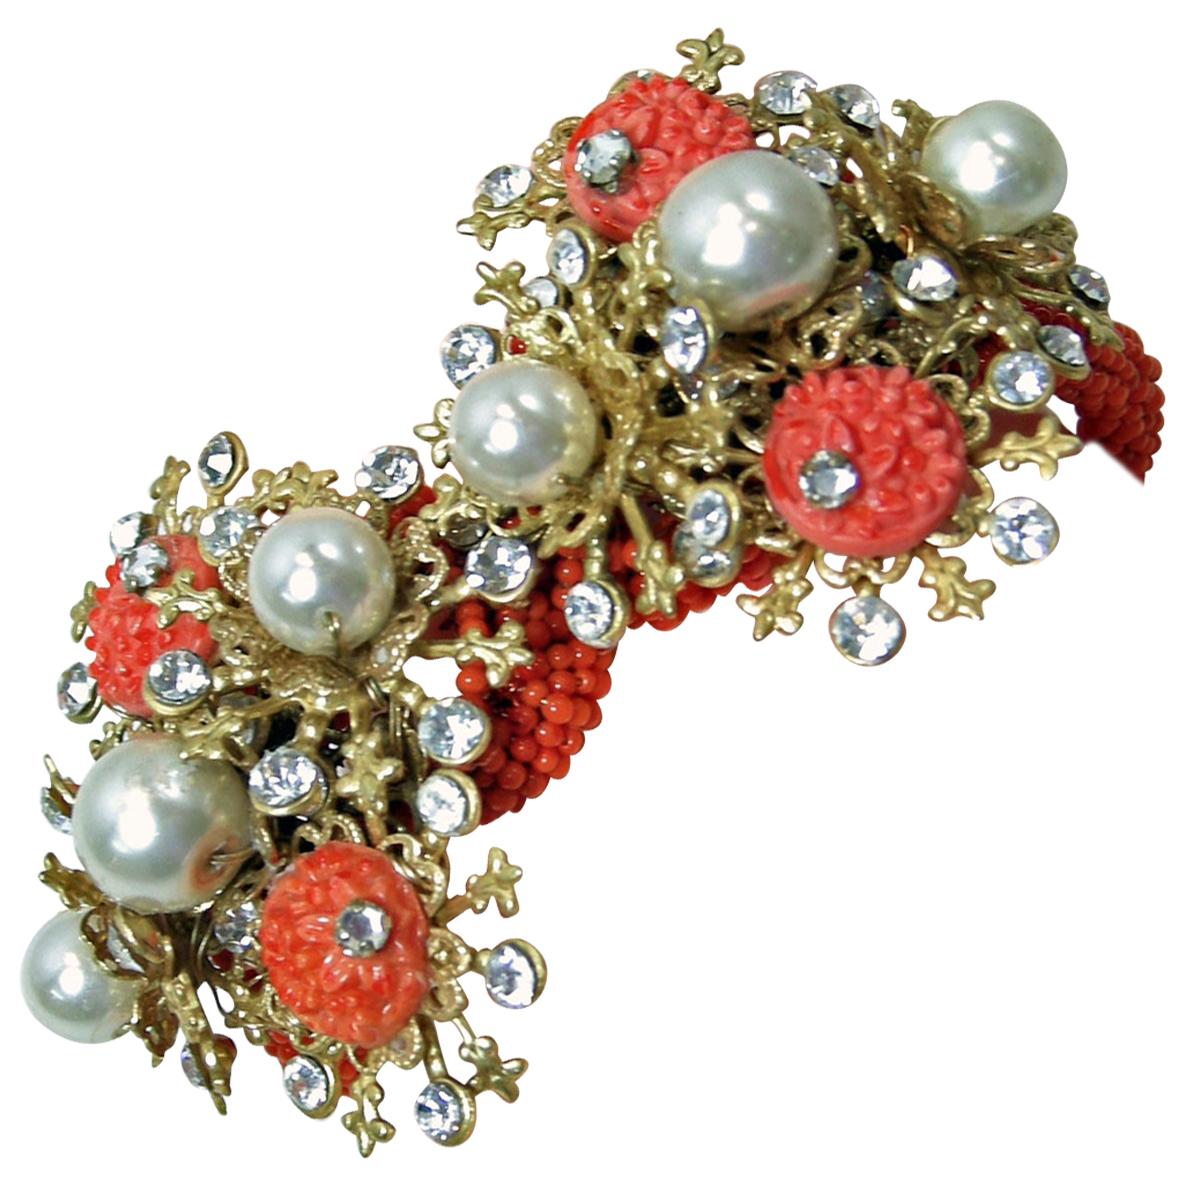 Vintage 1950s Faux Coral, Pearls & Crystals Clamper Bracelet For Sale